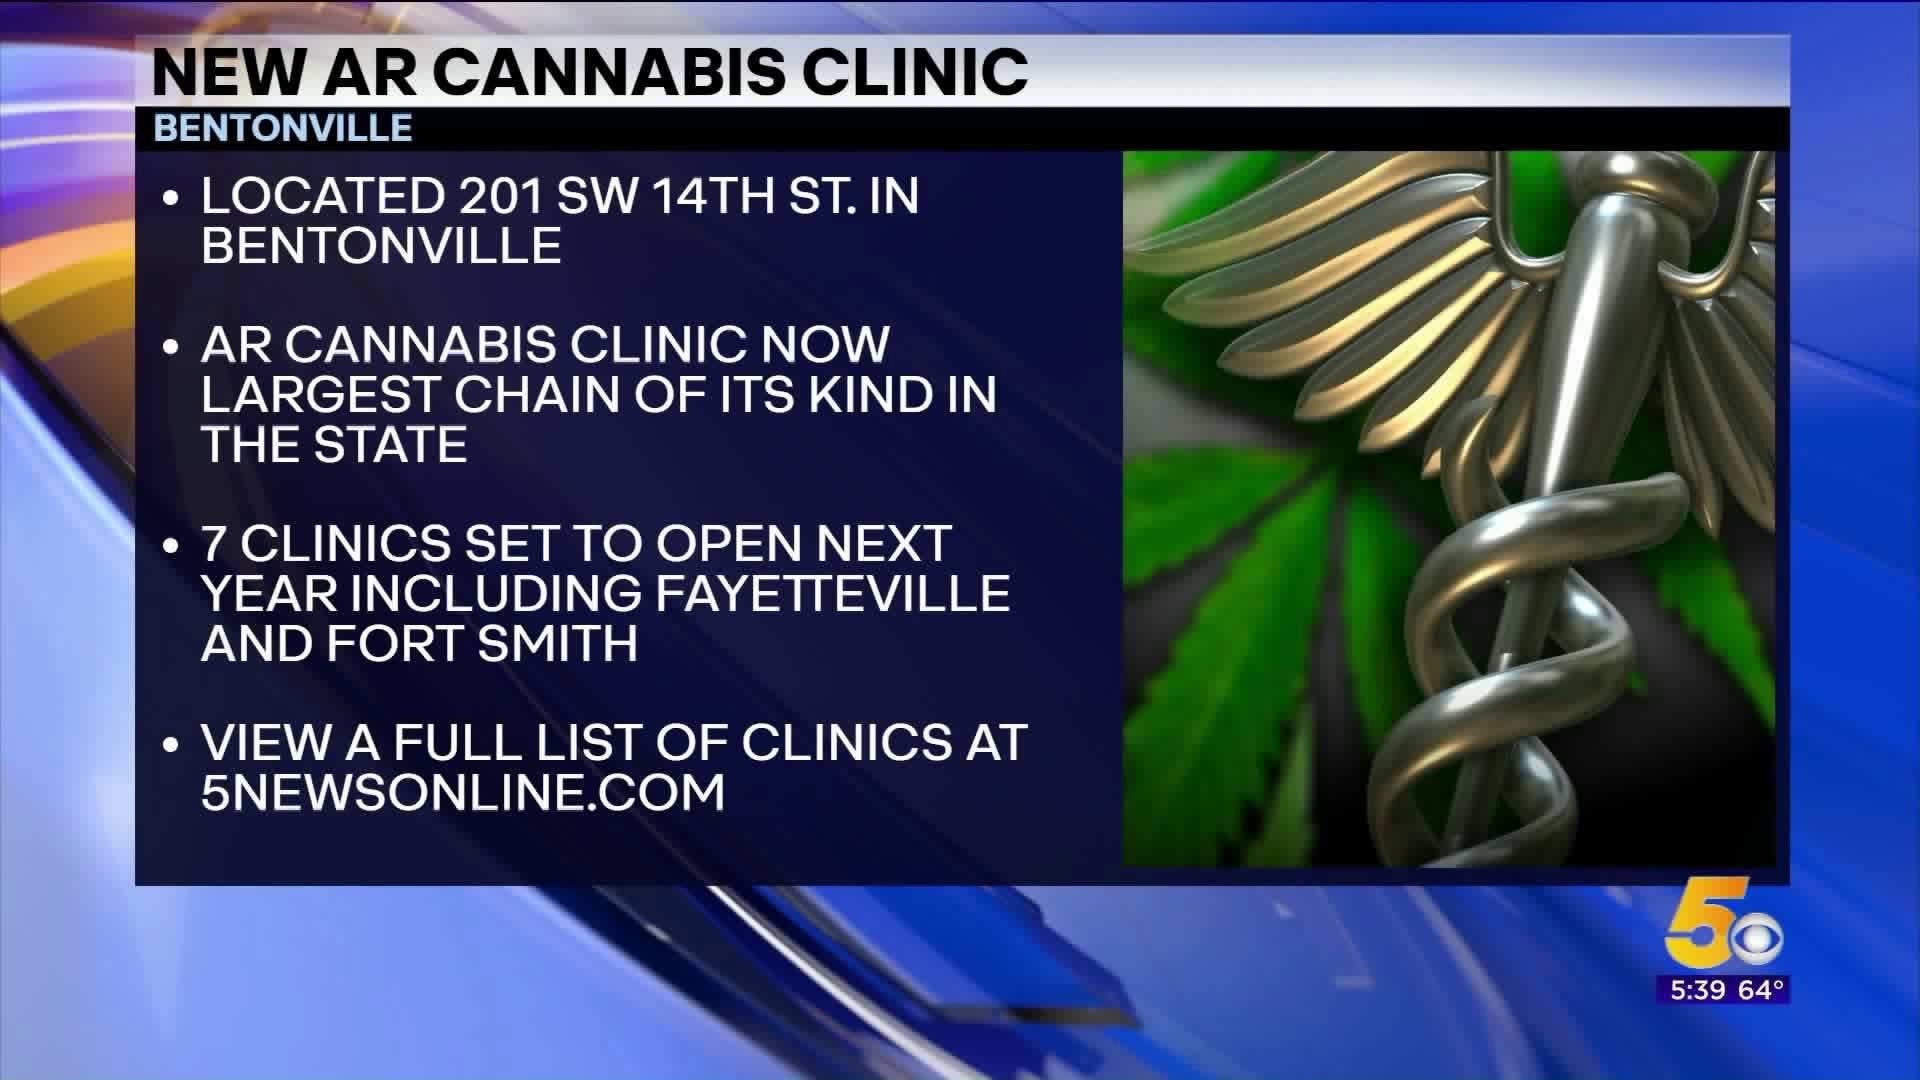 AR Cannabis Clinic Opens In Bentonville